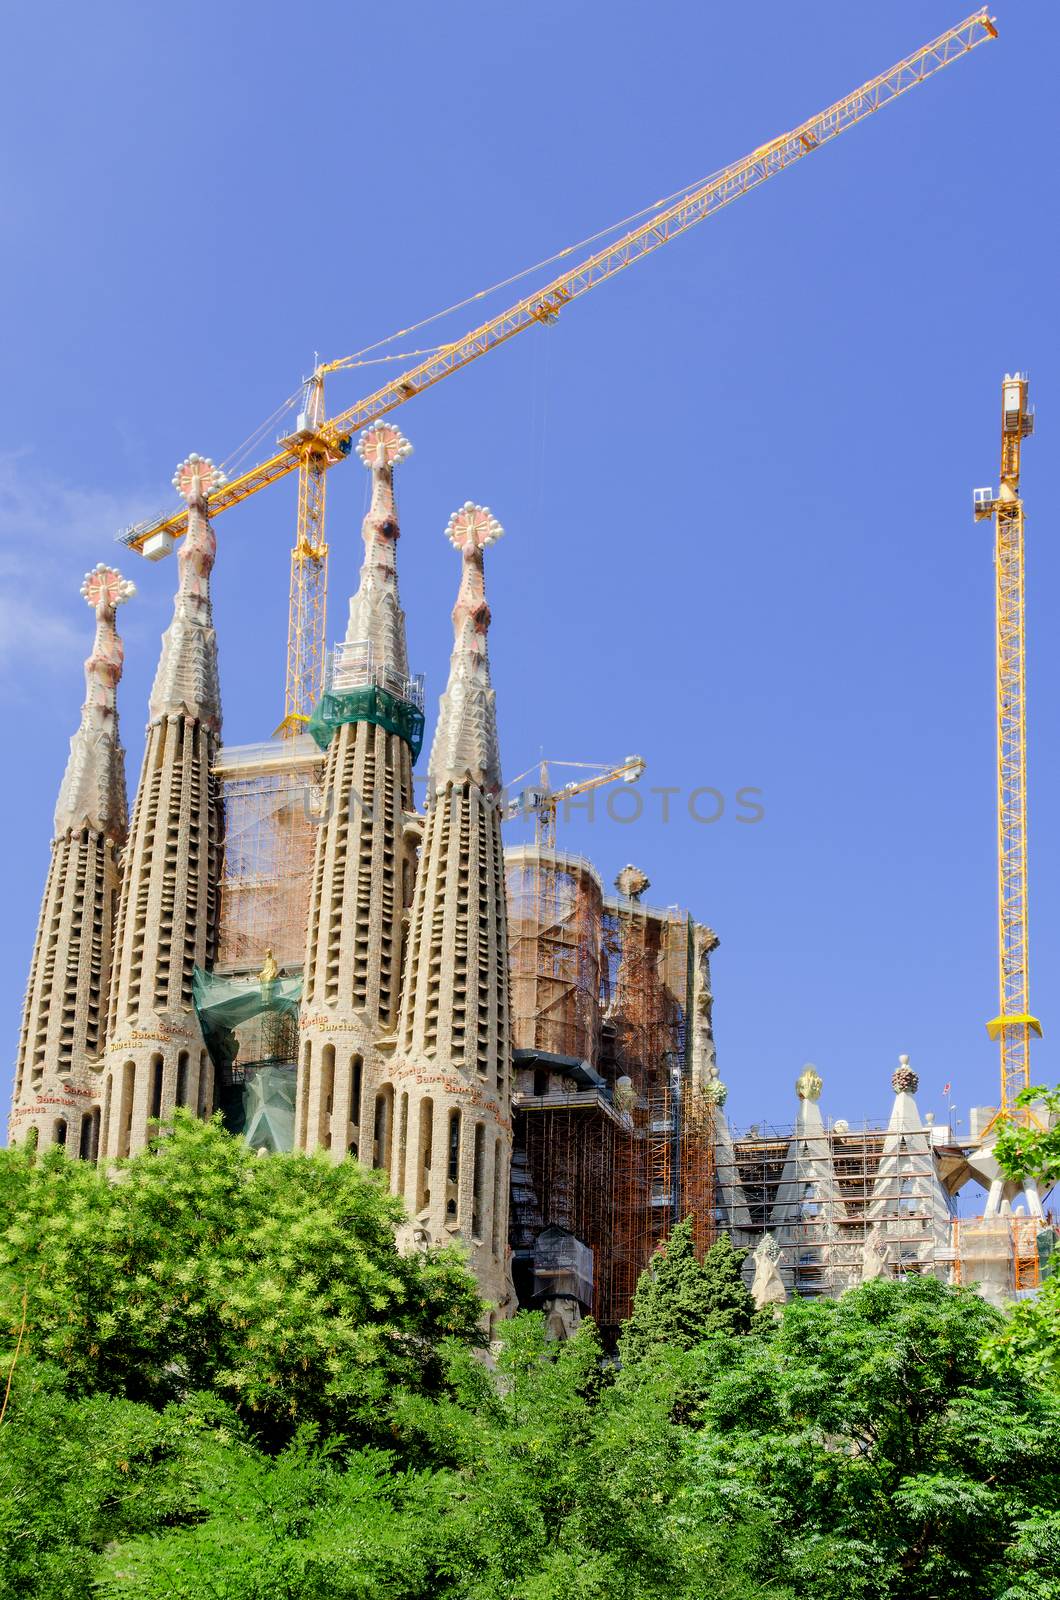 Sagrada Familia under construction by Nanisimova